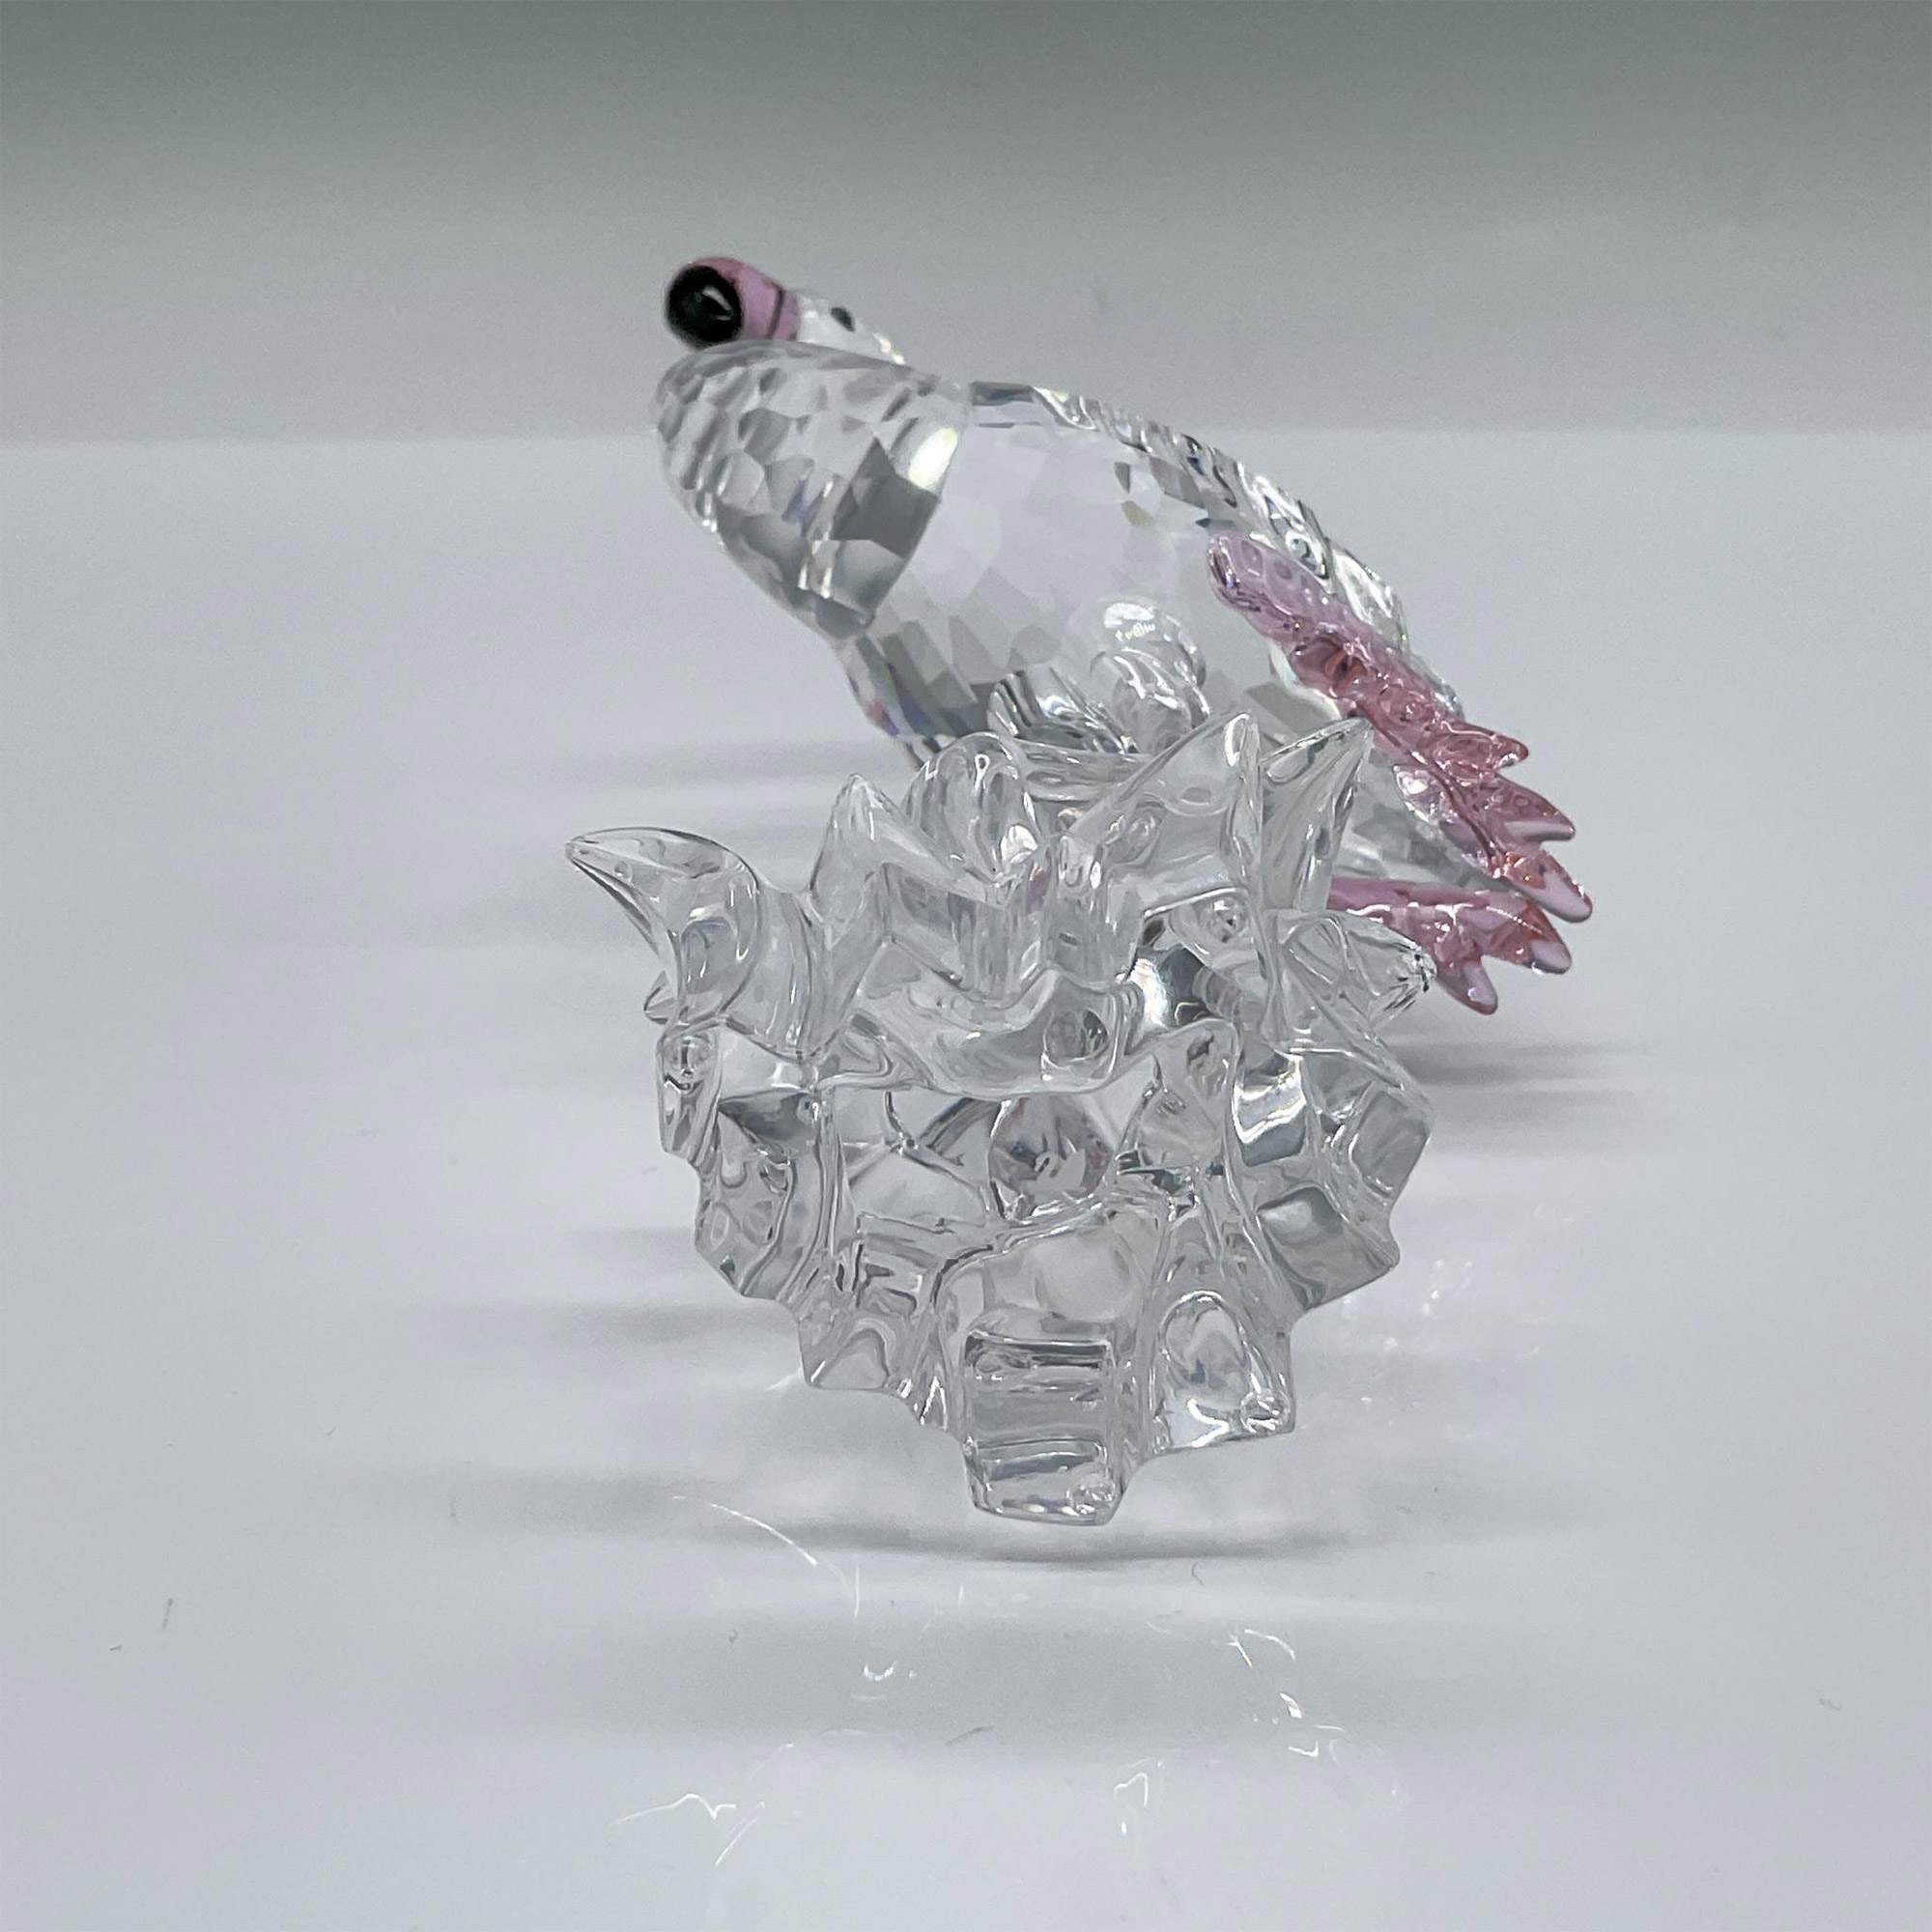 Swarovski Crystal Figurine, Flamingo - Image 3 of 3